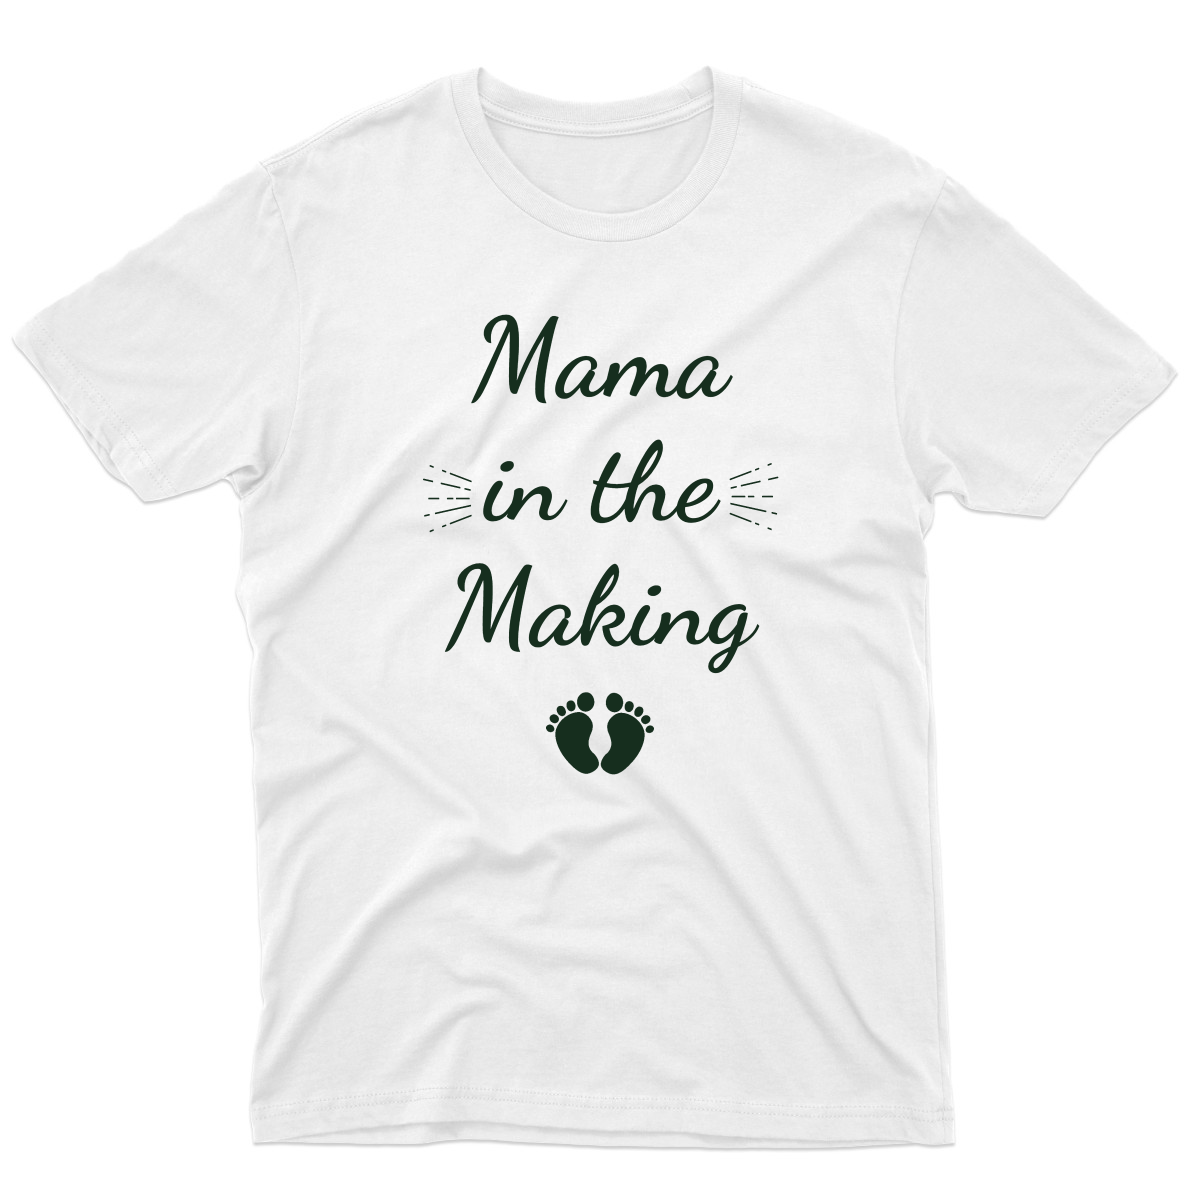 Mama in the Making Shirt Men's T-shirt | White